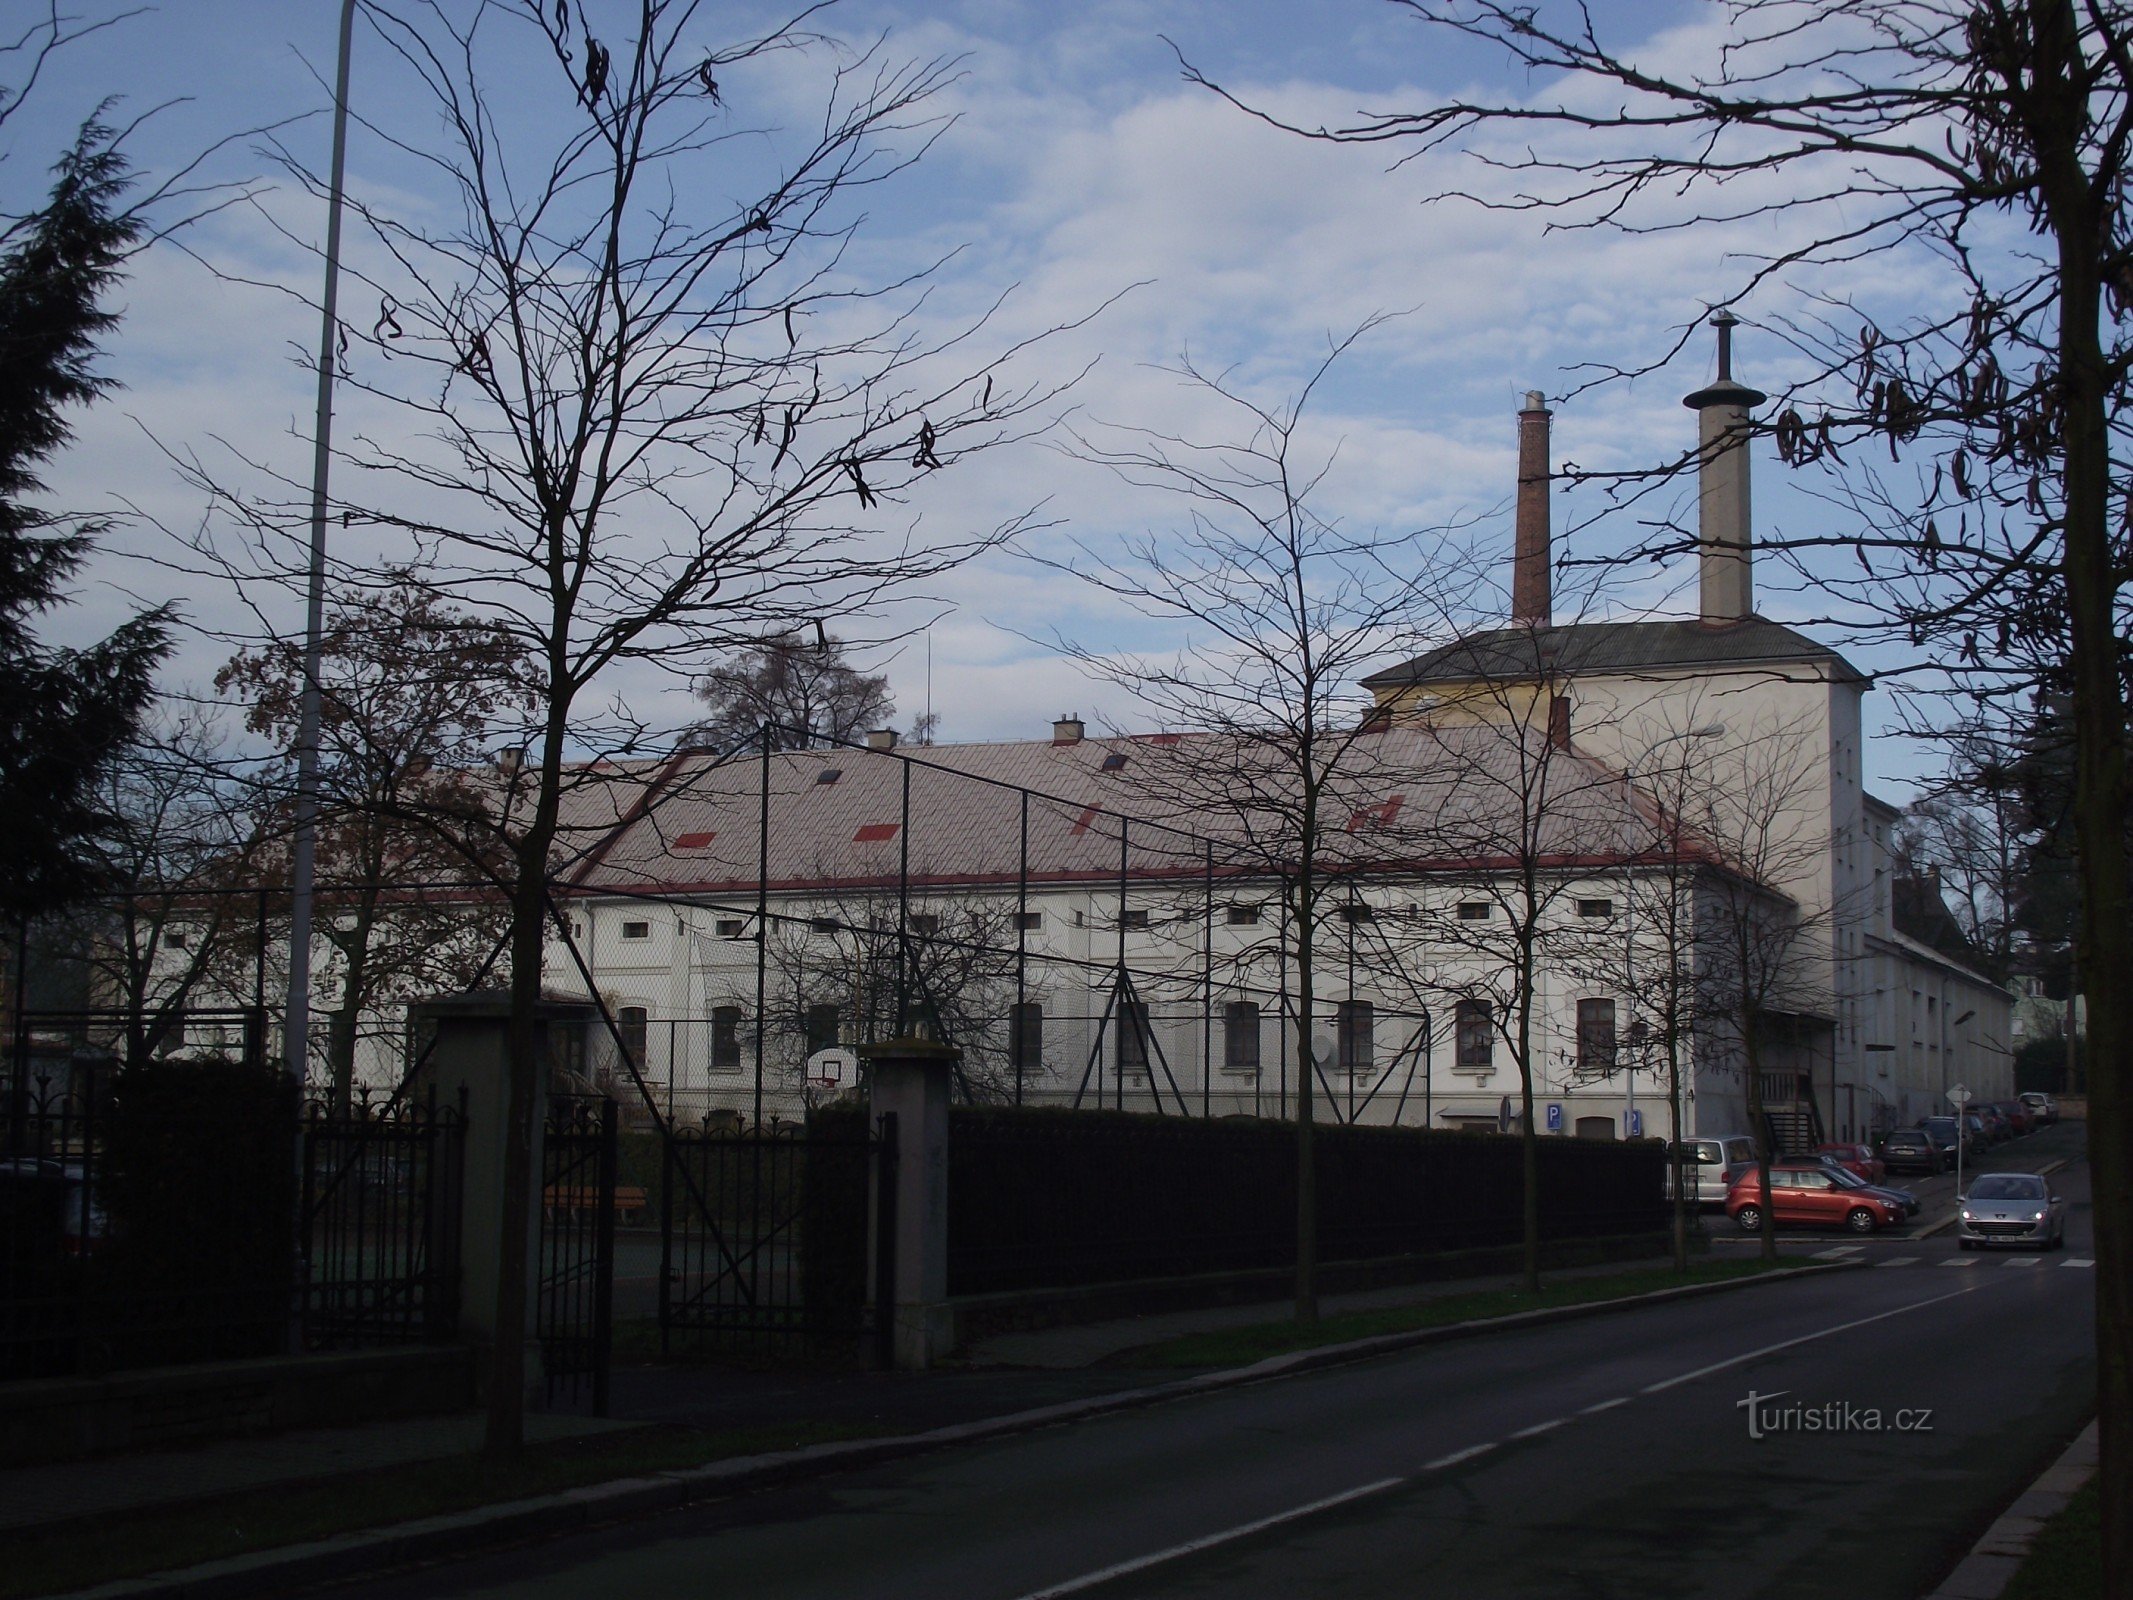 Šumperk – former brewery